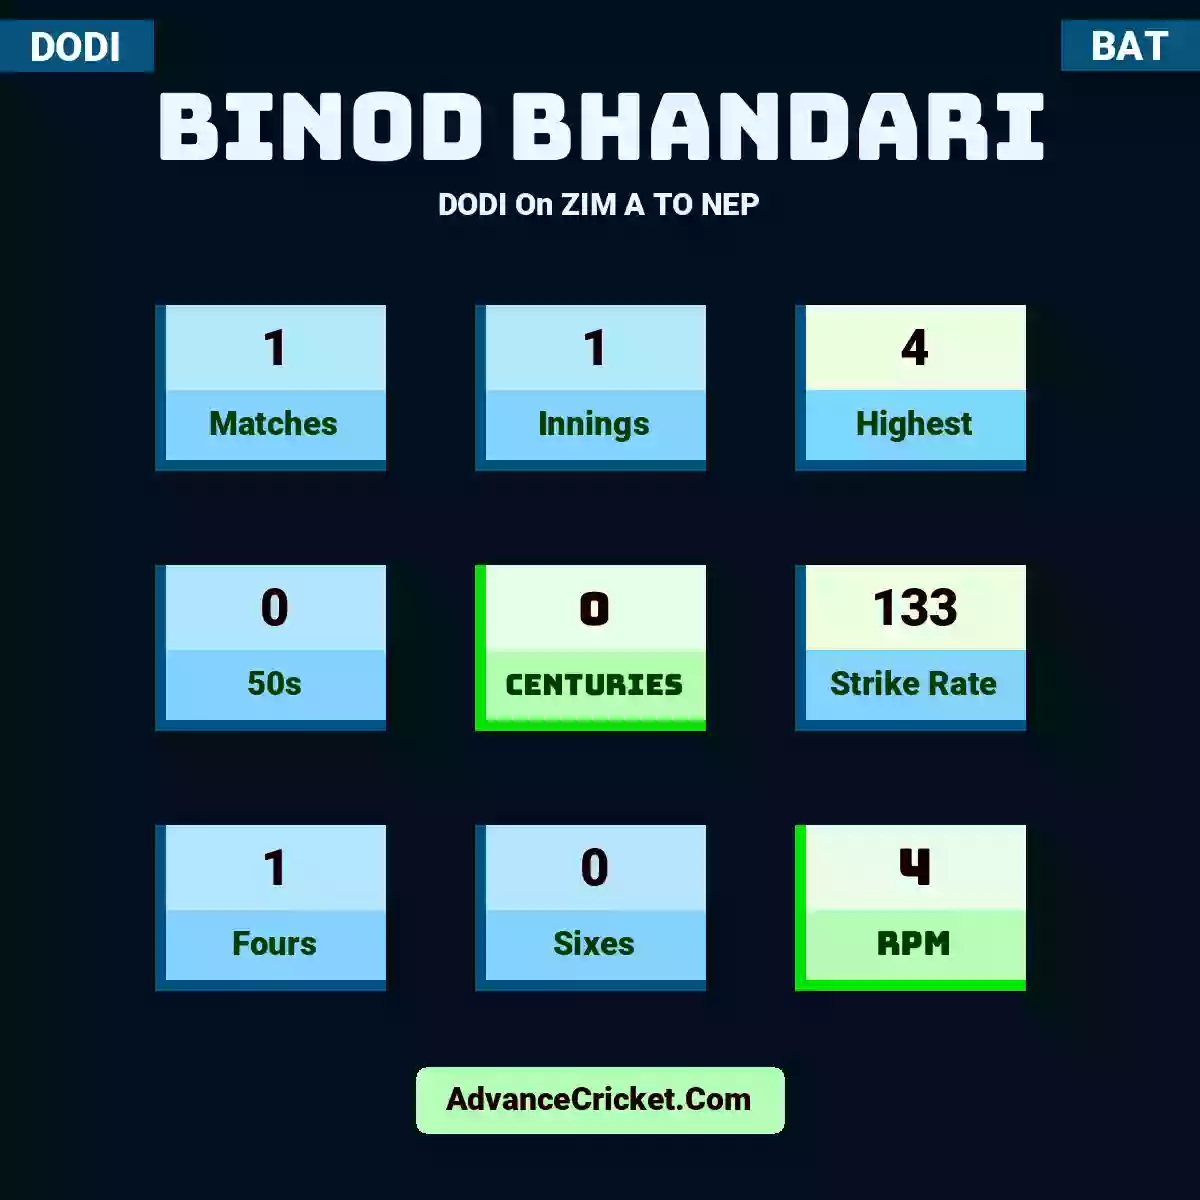 Binod Bhandari DODI  On ZIM A TO NEP, Binod Bhandari played 1 matches, scored 4 runs as highest, 0 half-centuries, and 0 centuries, with a strike rate of 133. B.Bhandari hit 1 fours and 0 sixes, with an RPM of 4.